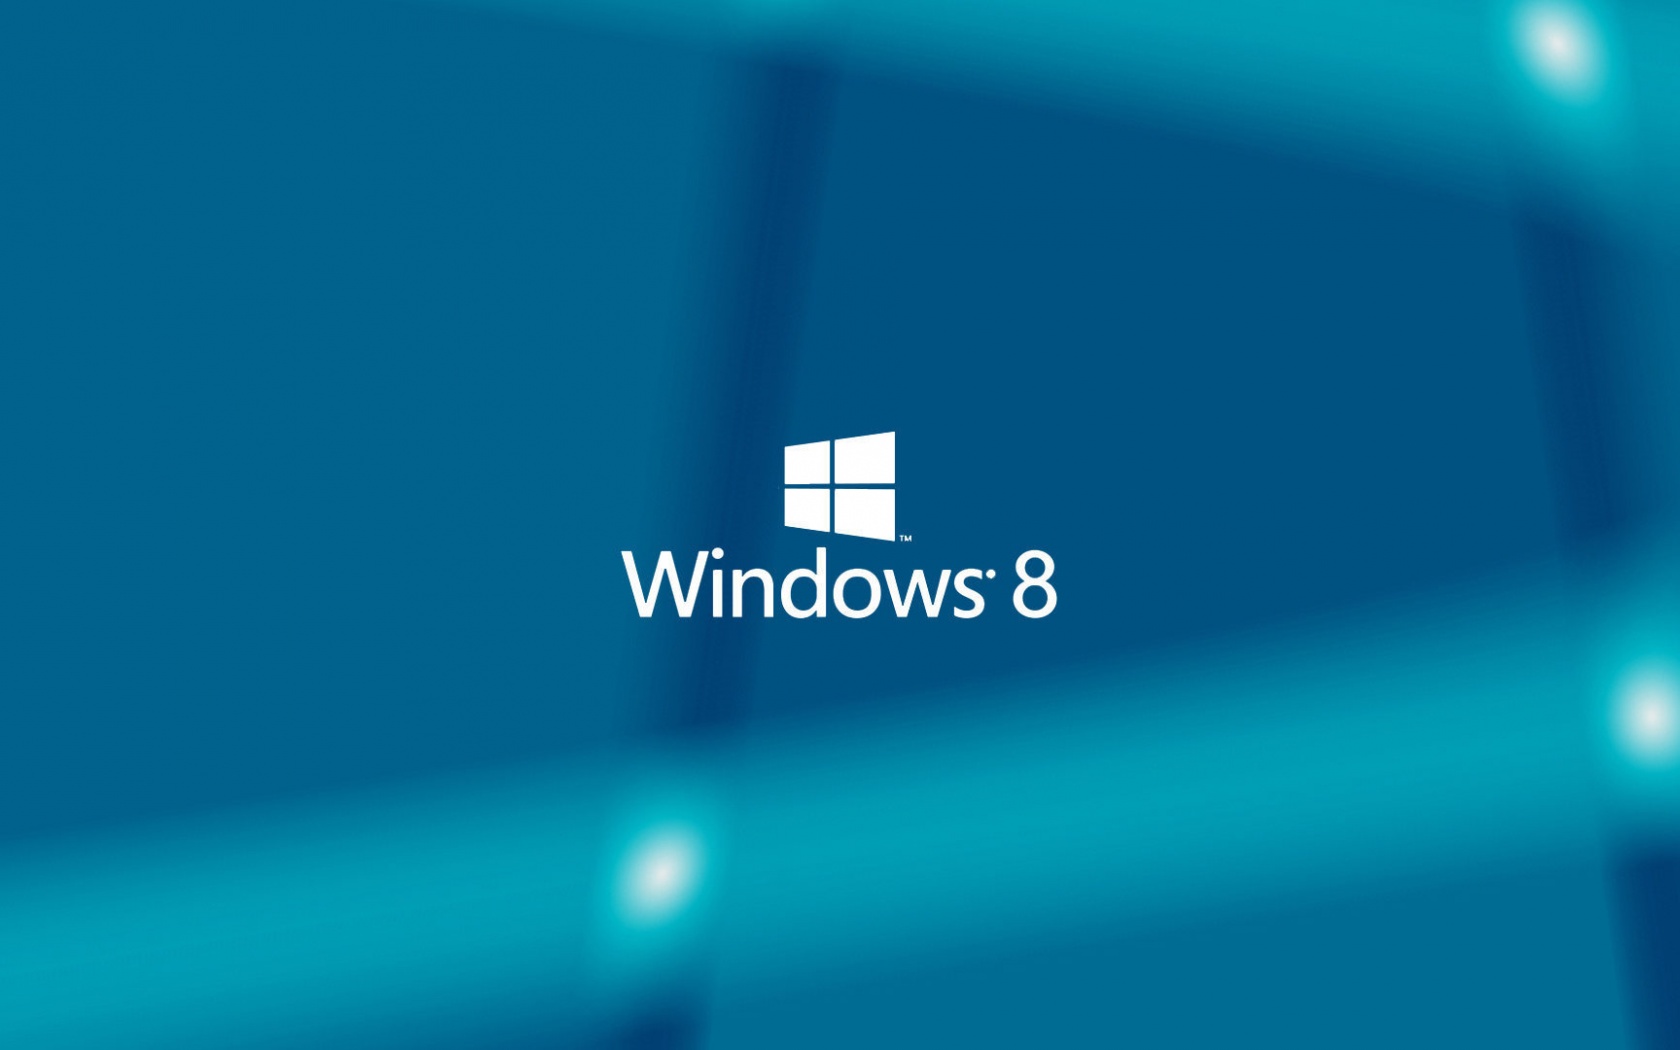 Windows Blue Background Desktop Pc And Mac Wallpaper